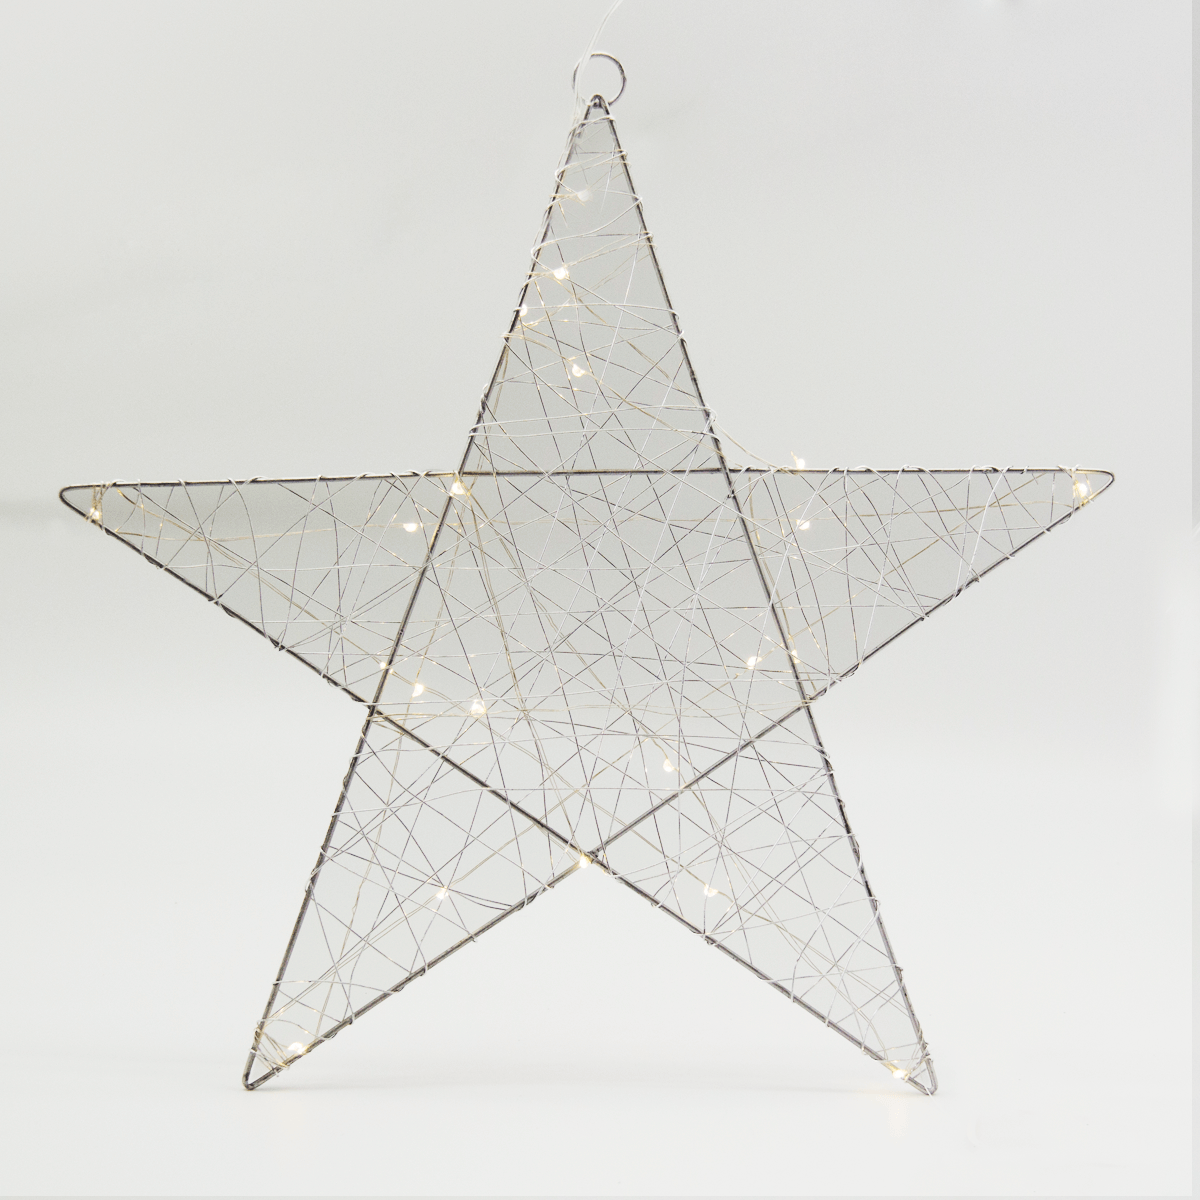 Estrella Luz Led 40 Cm Plateada | Navidad | decoracion